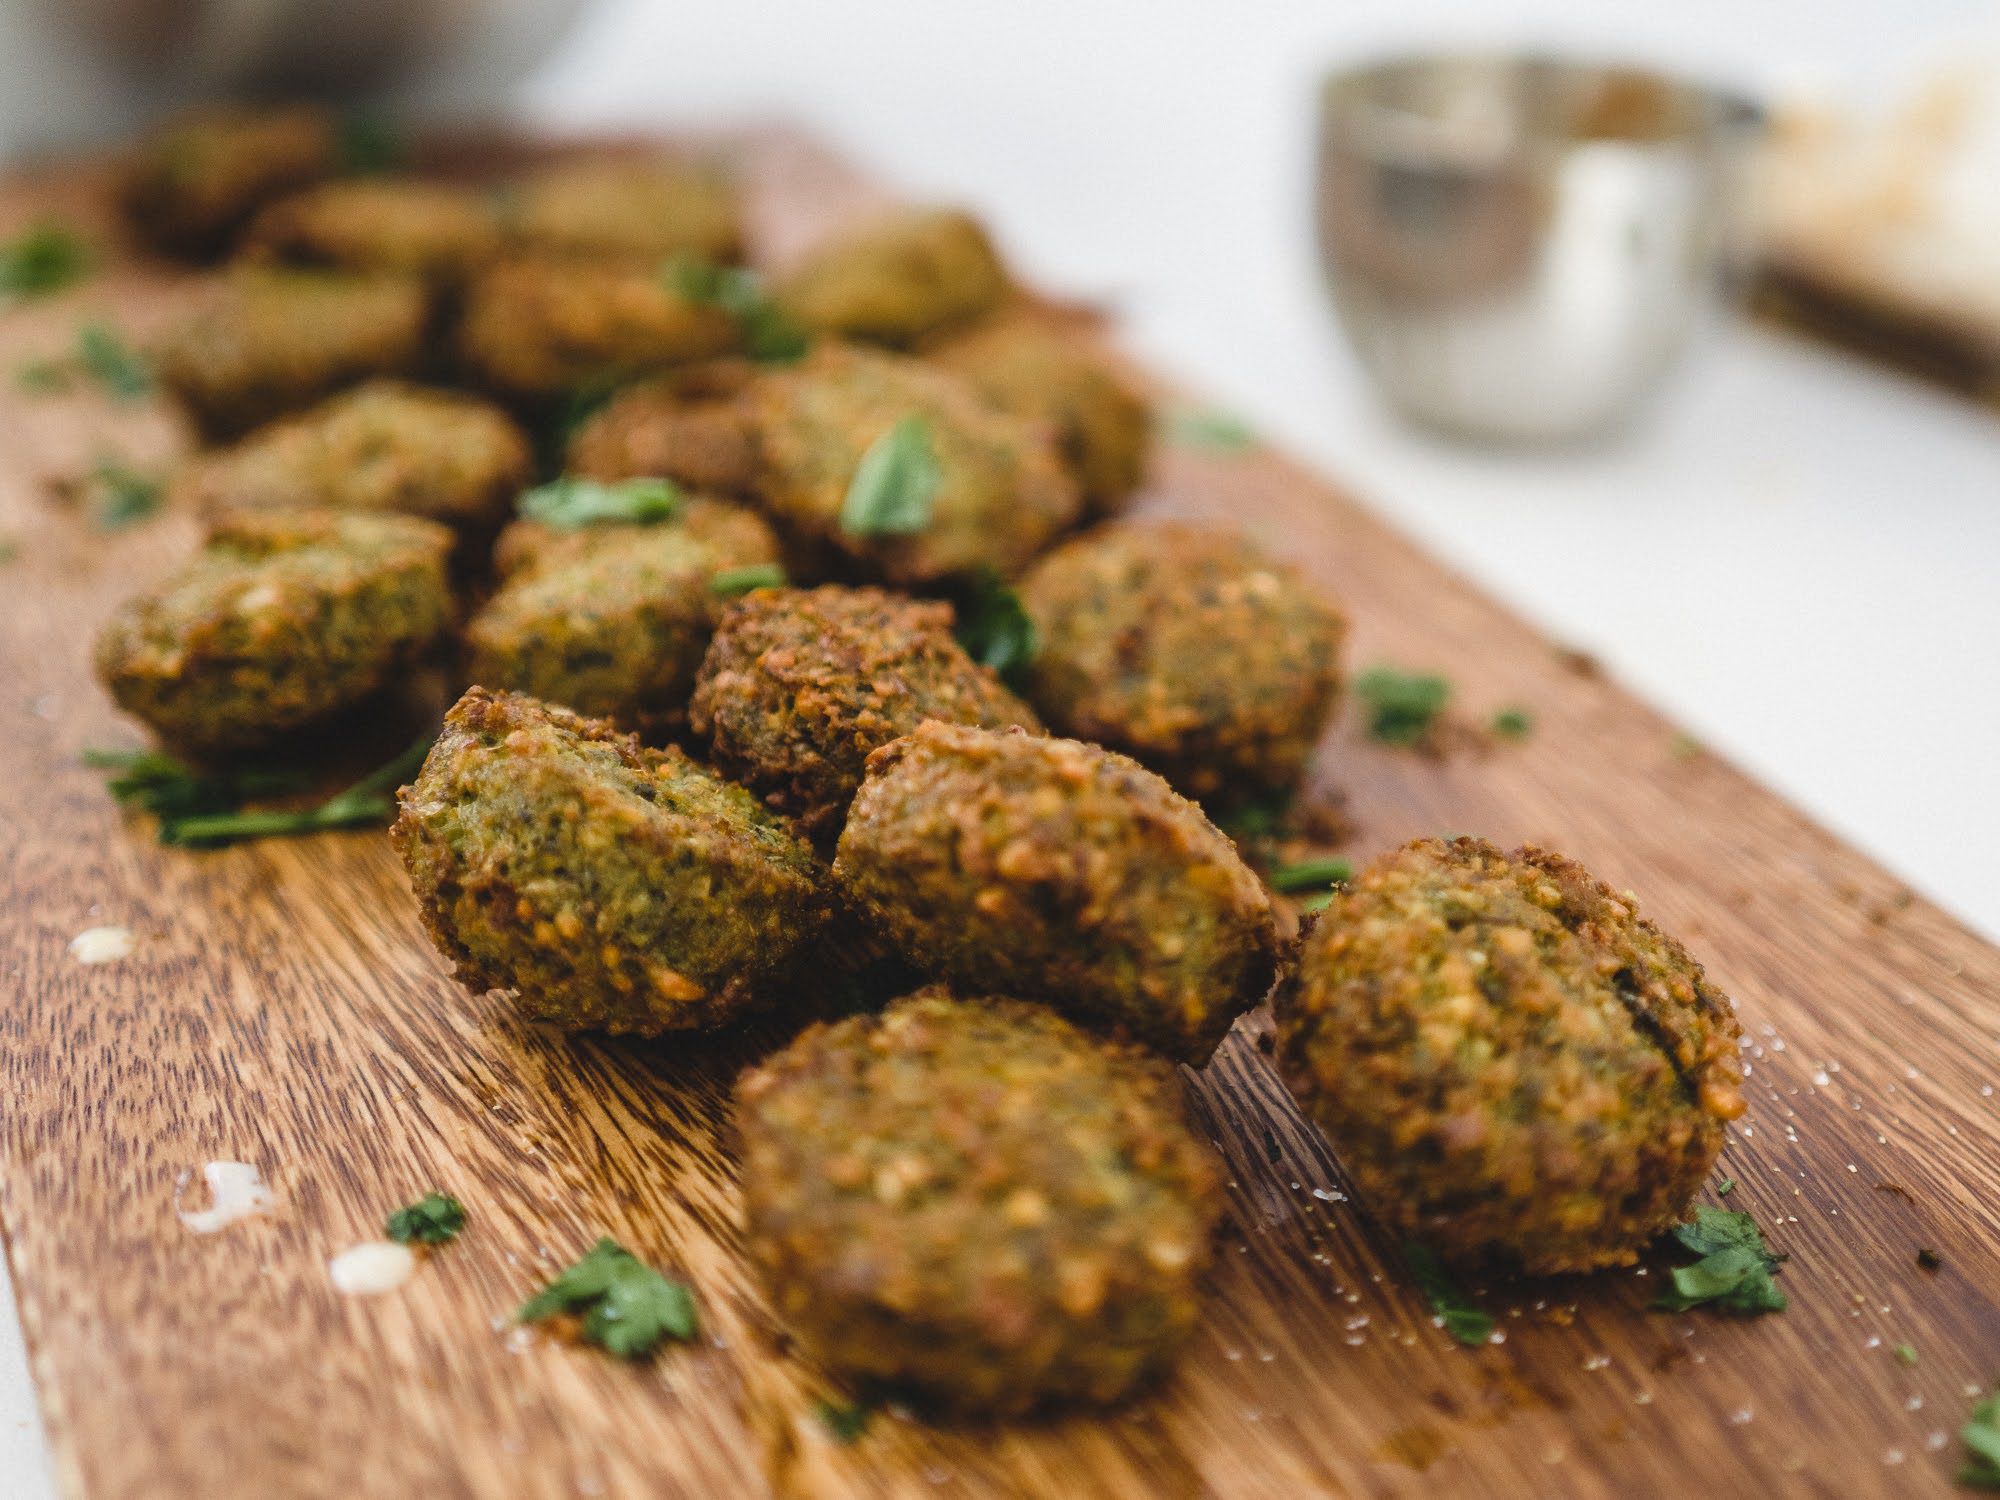 Freshly fried vegan falafel balls